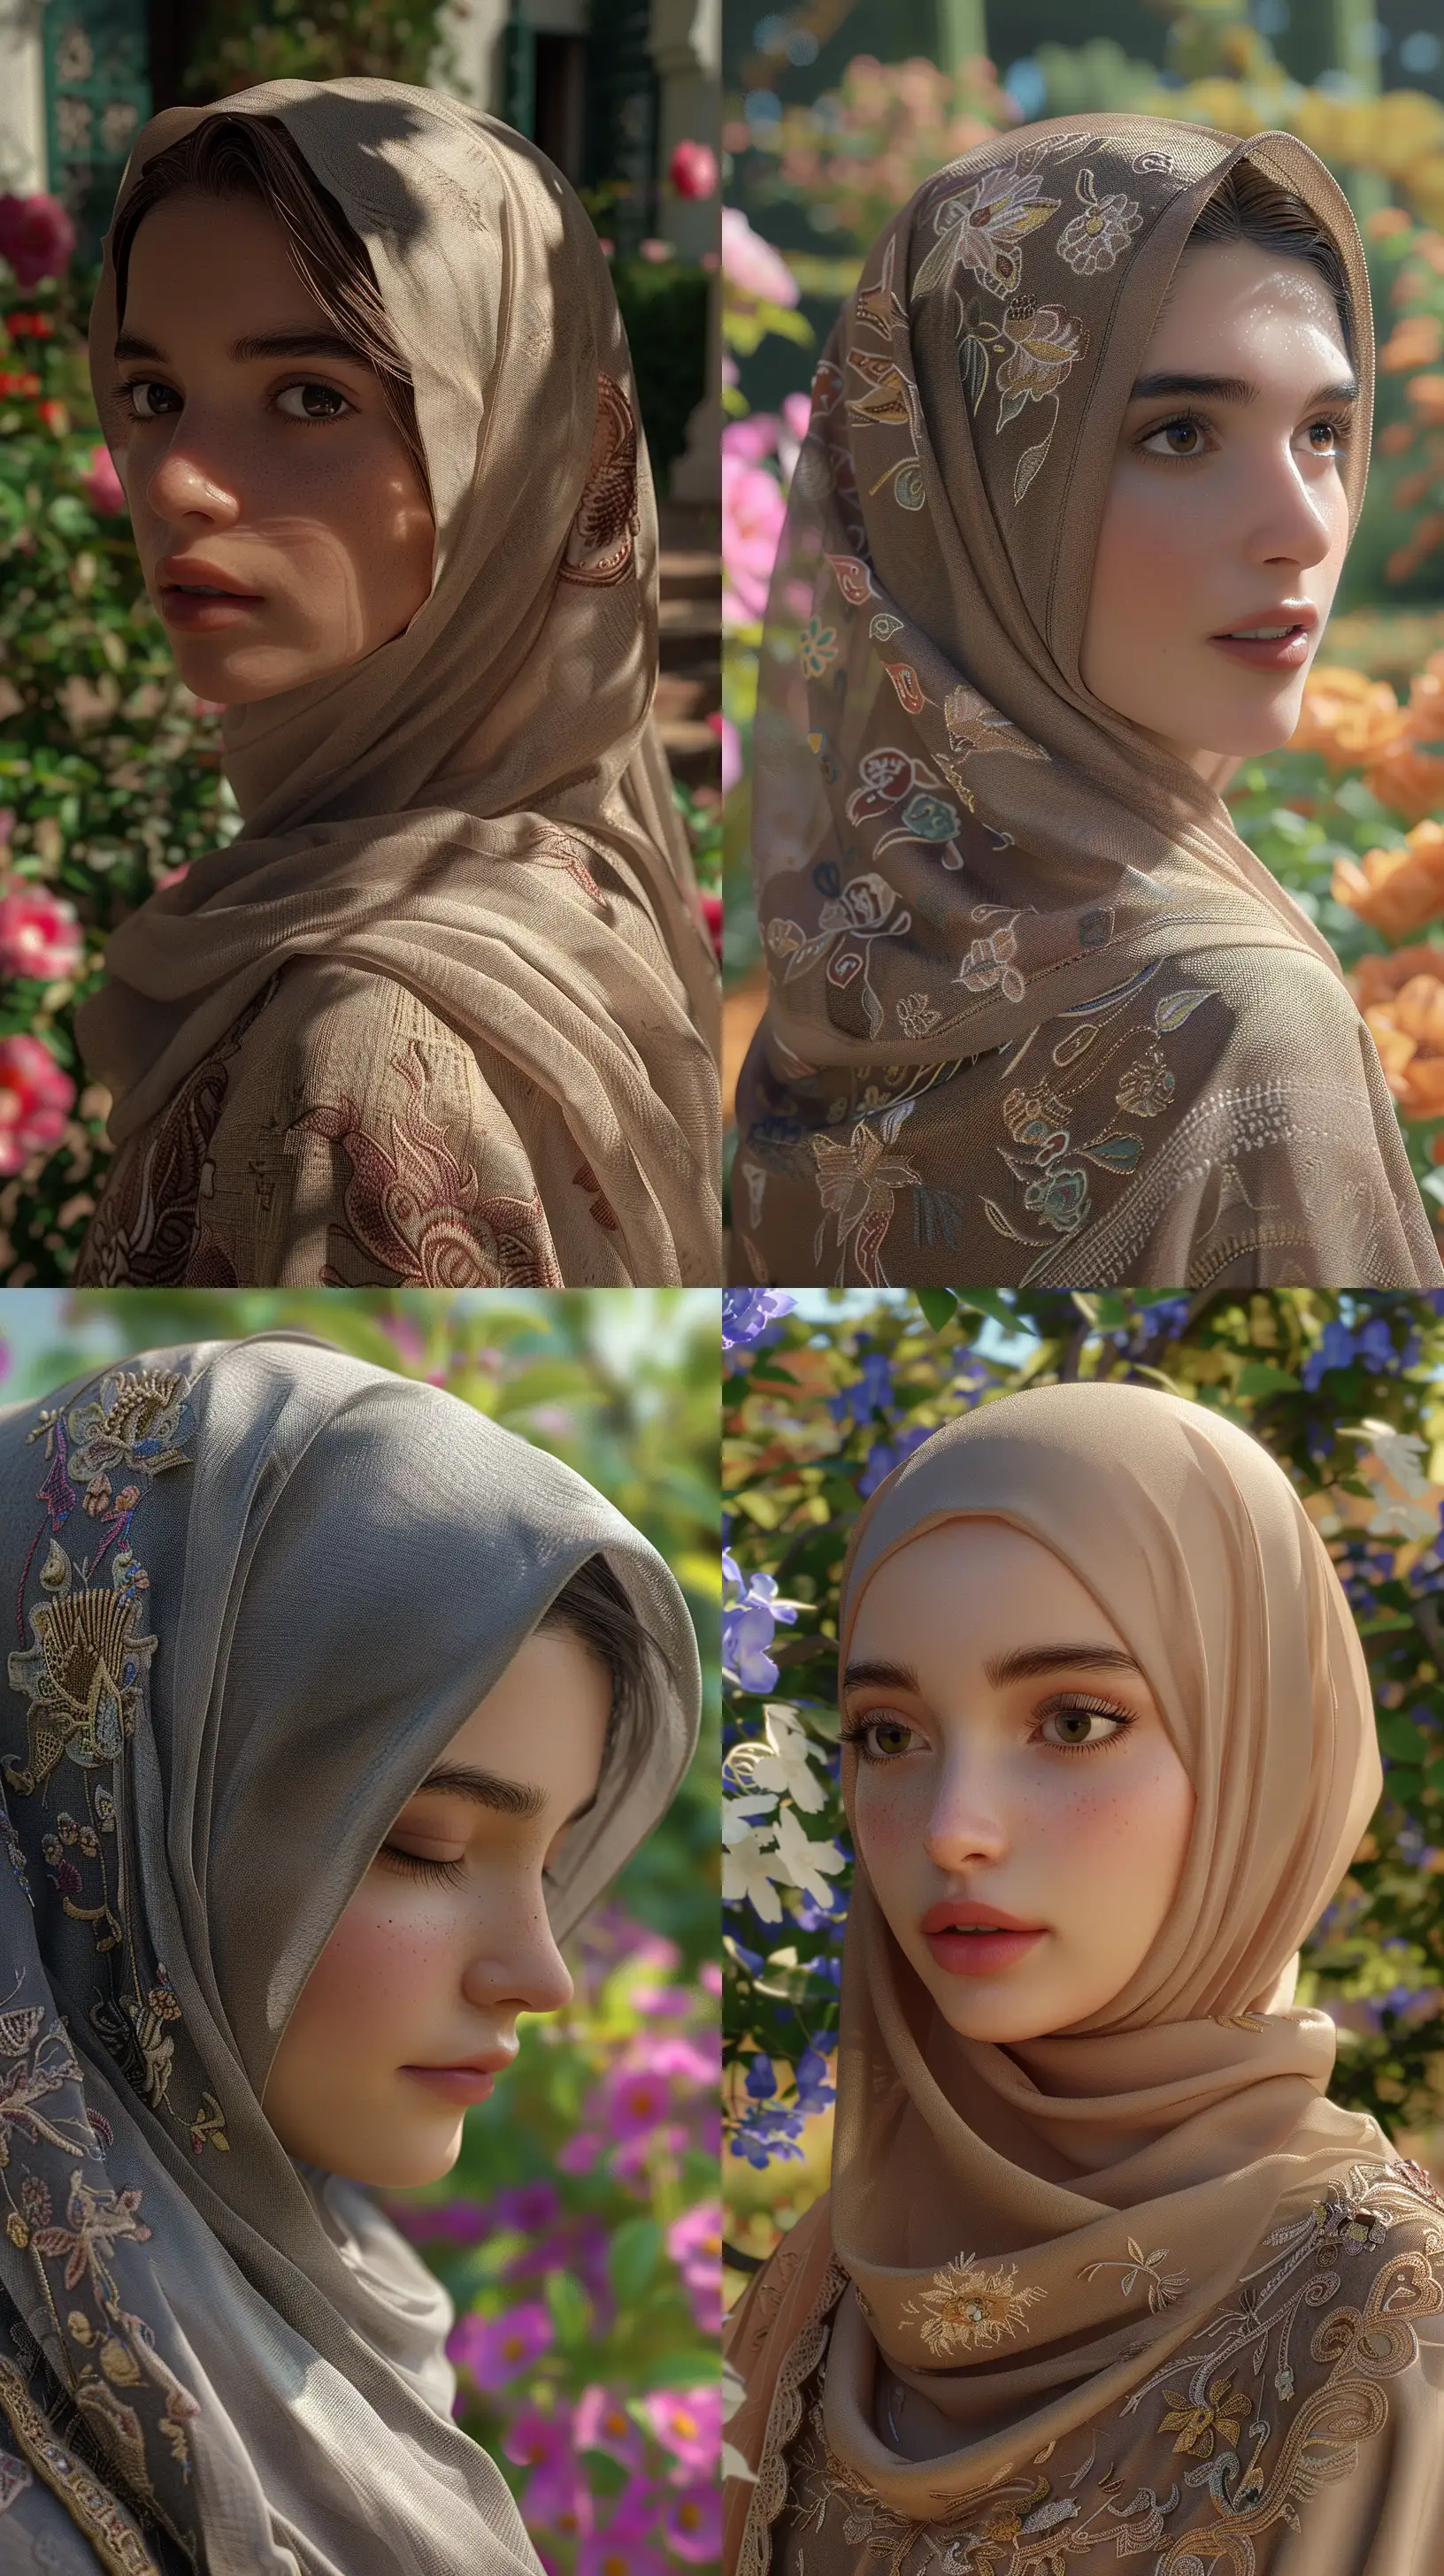 Middle-Eastern-Princess-in-Hijab-Enchants-in-Photorealistic-3D-Garden-Scene